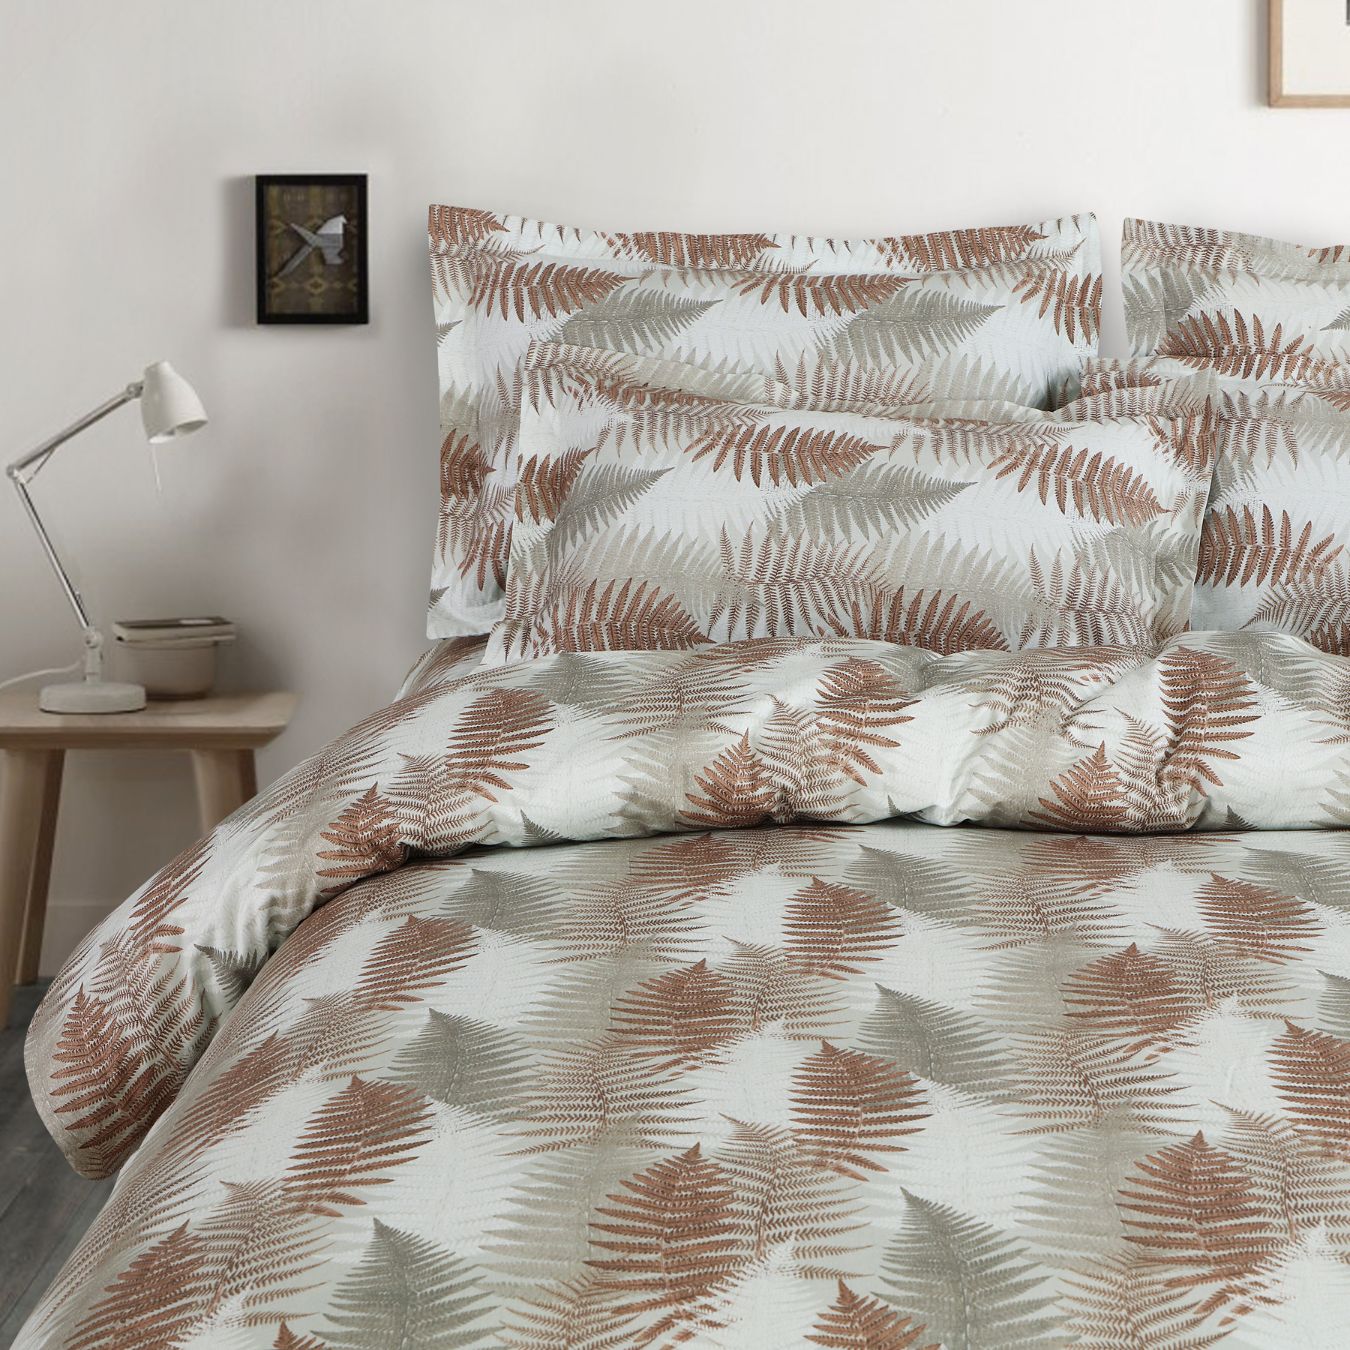 Malako Royale XL Forest Brown Botanic 100% Cotton King Size Bed Sheet/Bedding Set - MALAKO